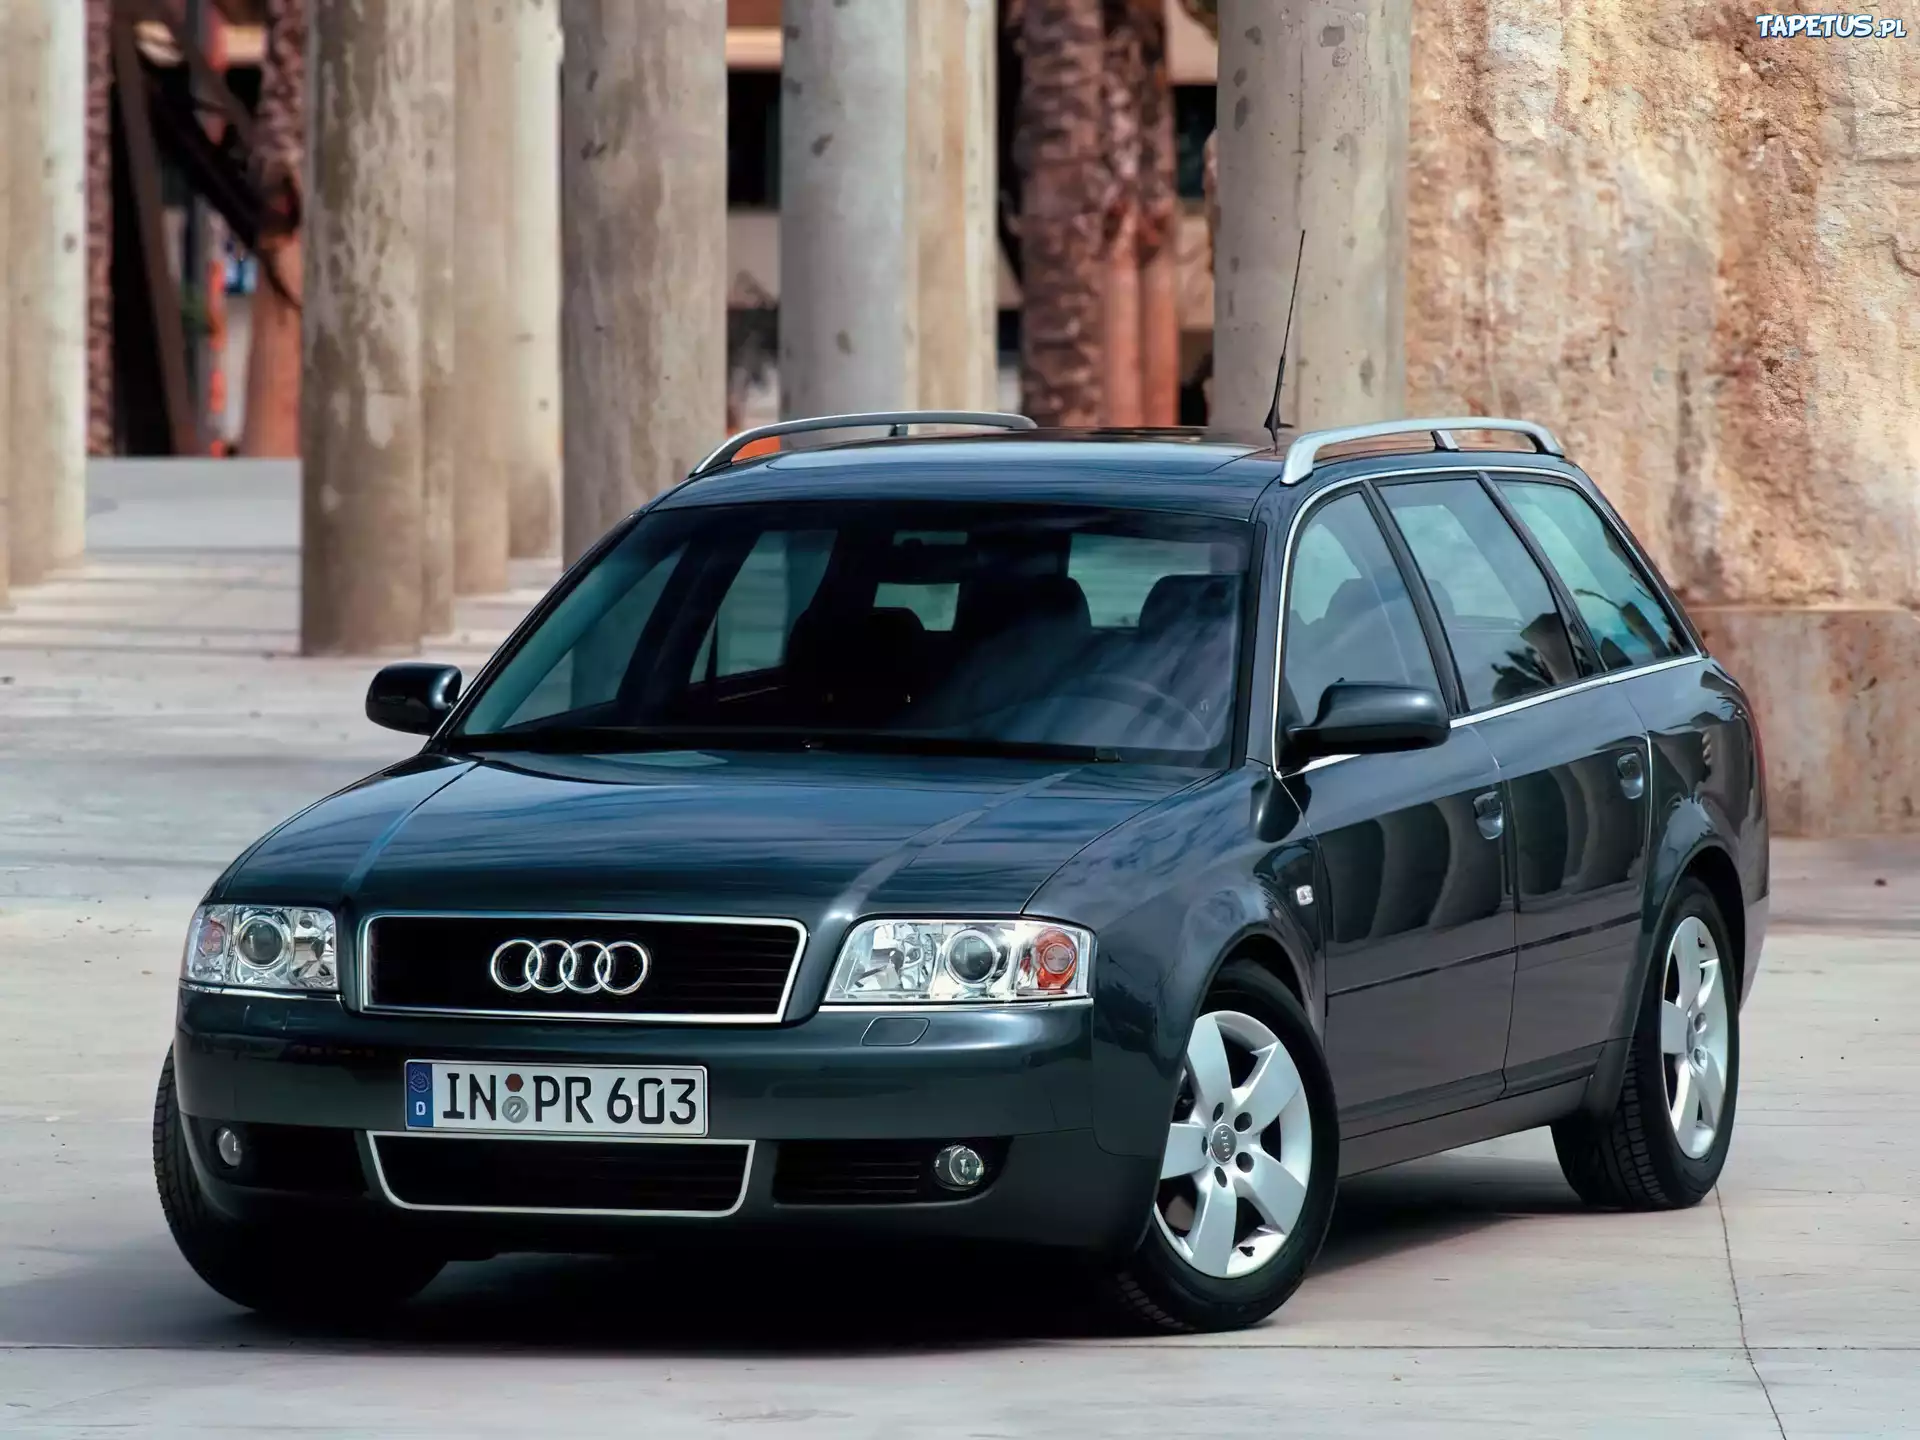 Ауди универсал 1.9 тди. Audi a6 c5 универсал. Ауди а6 Авант 2001. Ауди а6 Авант 2001 универсал. Audi a6 2001.